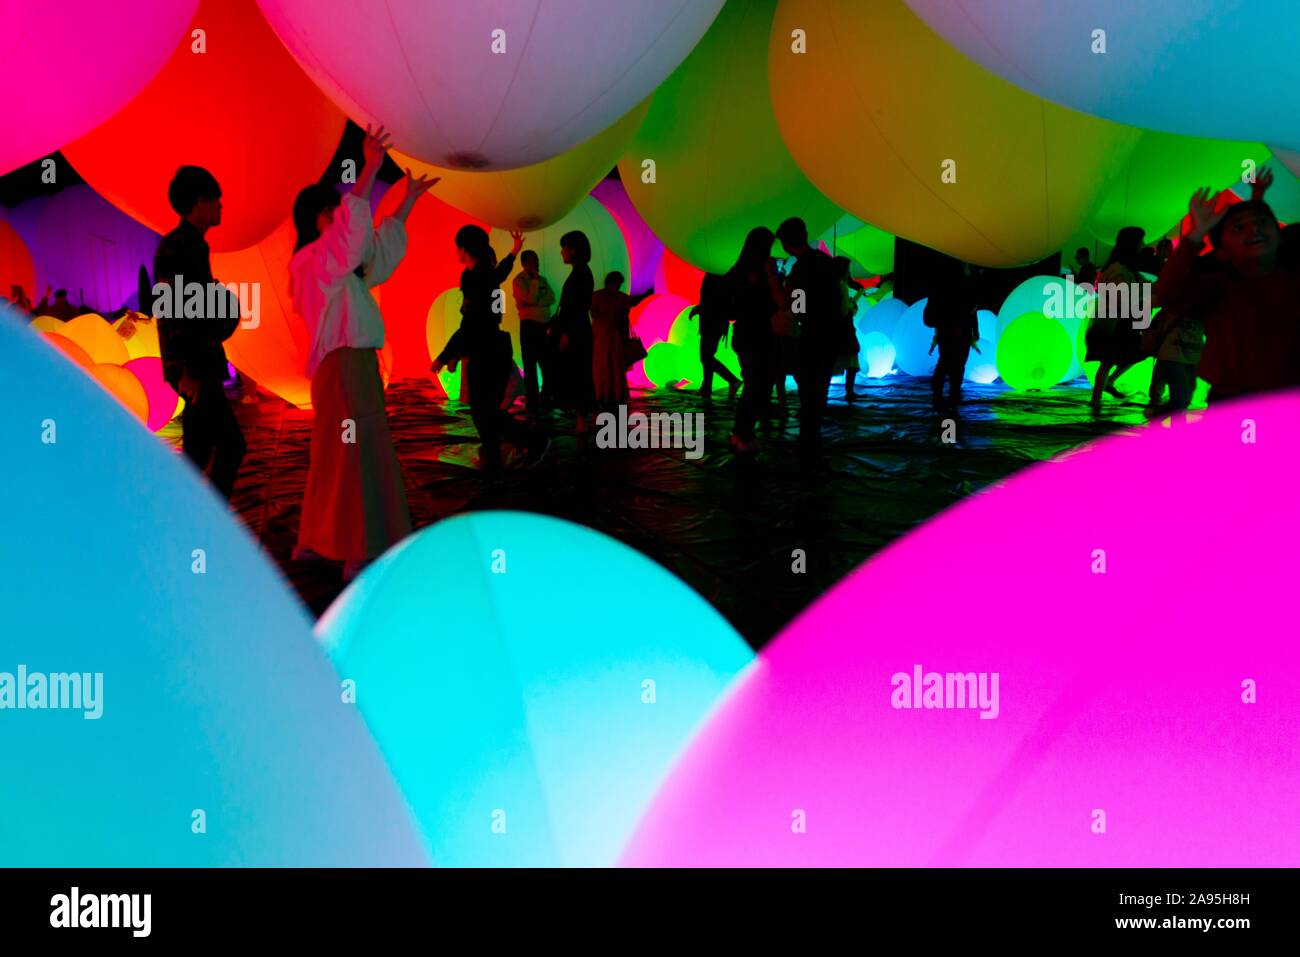 Sihouetten by visitors, light installation with illuminated spheres, exhibition at the Digital Art Museum, Epson TeamLab Borderless, Odaiba, Tokyo Stock Photo